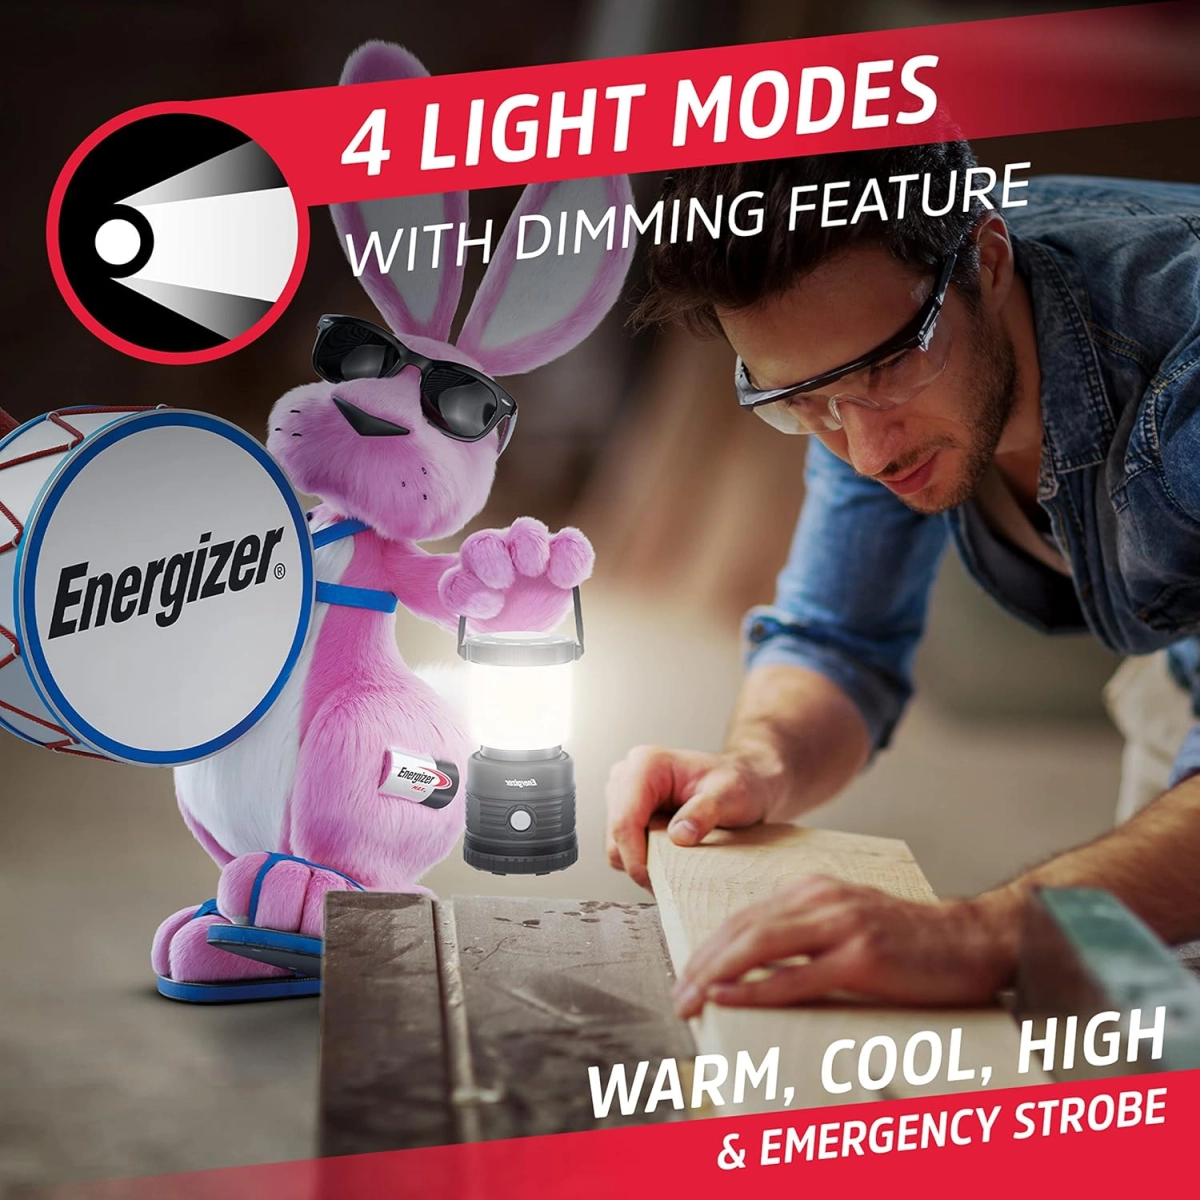 Energizer LED Campinglampe Doppelpack